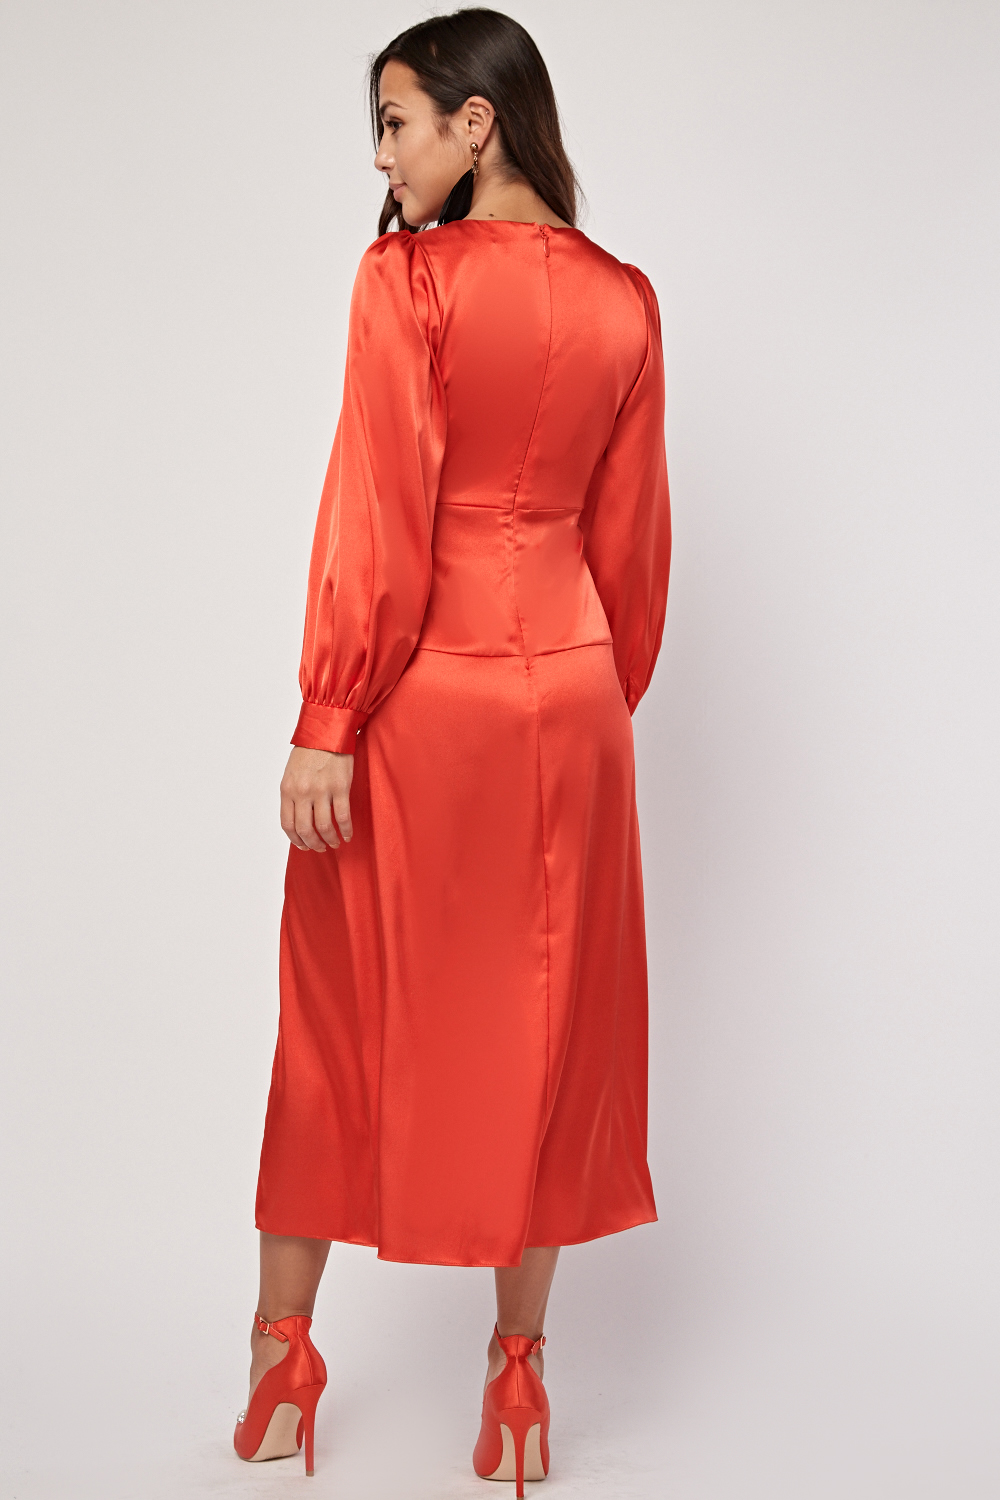 Bishop Sleeve Sateen Midi Dress - Just $7